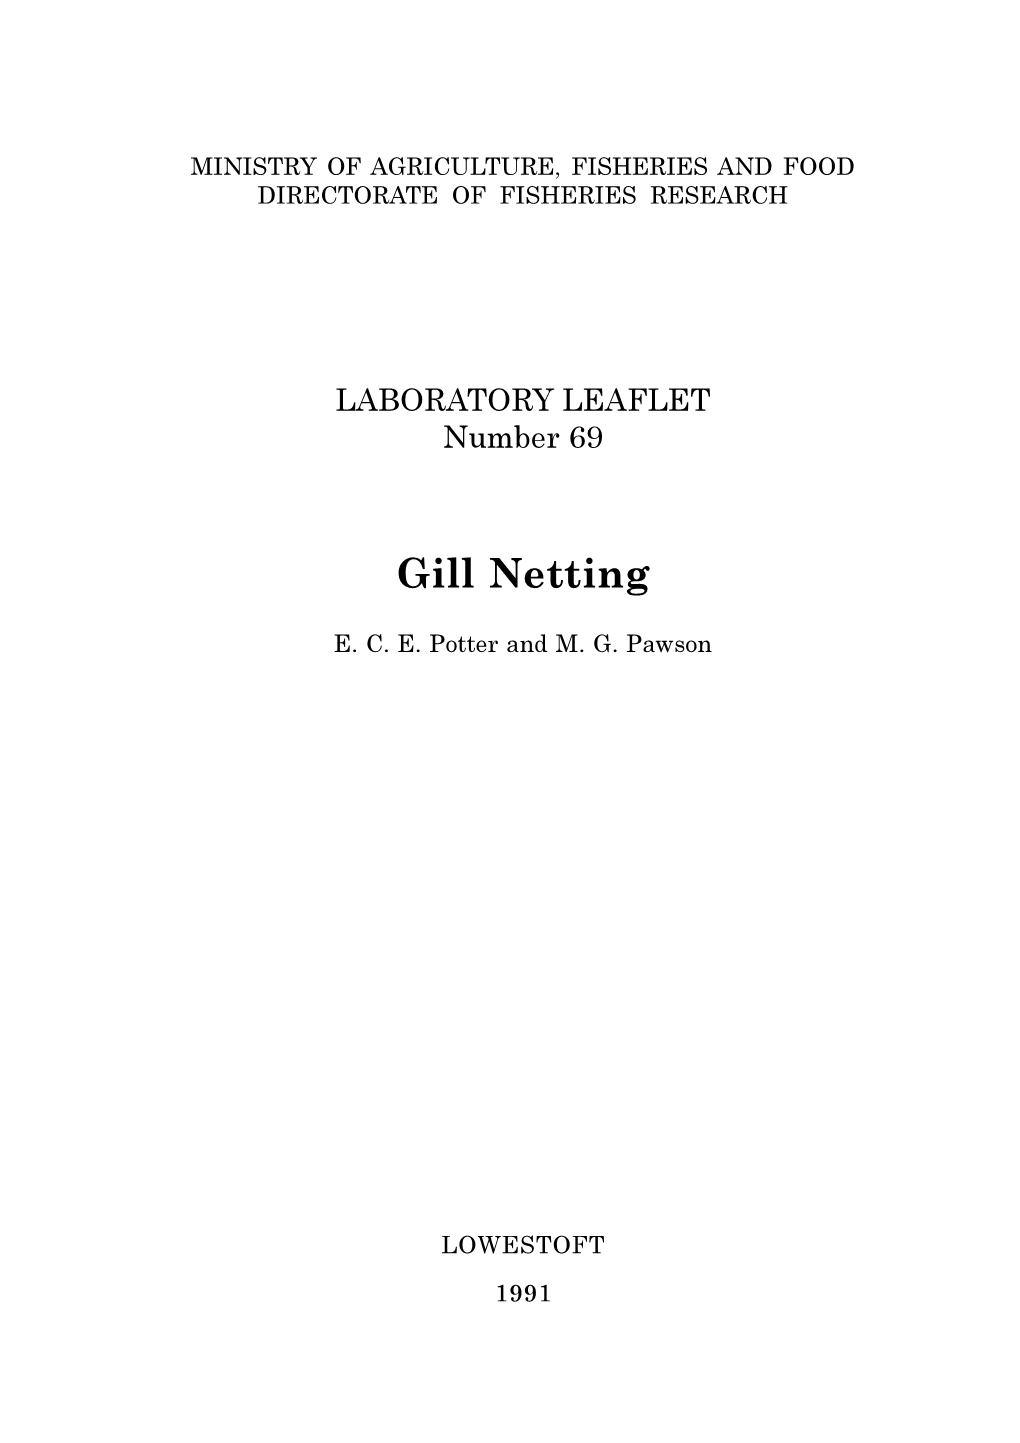 Gill Netting